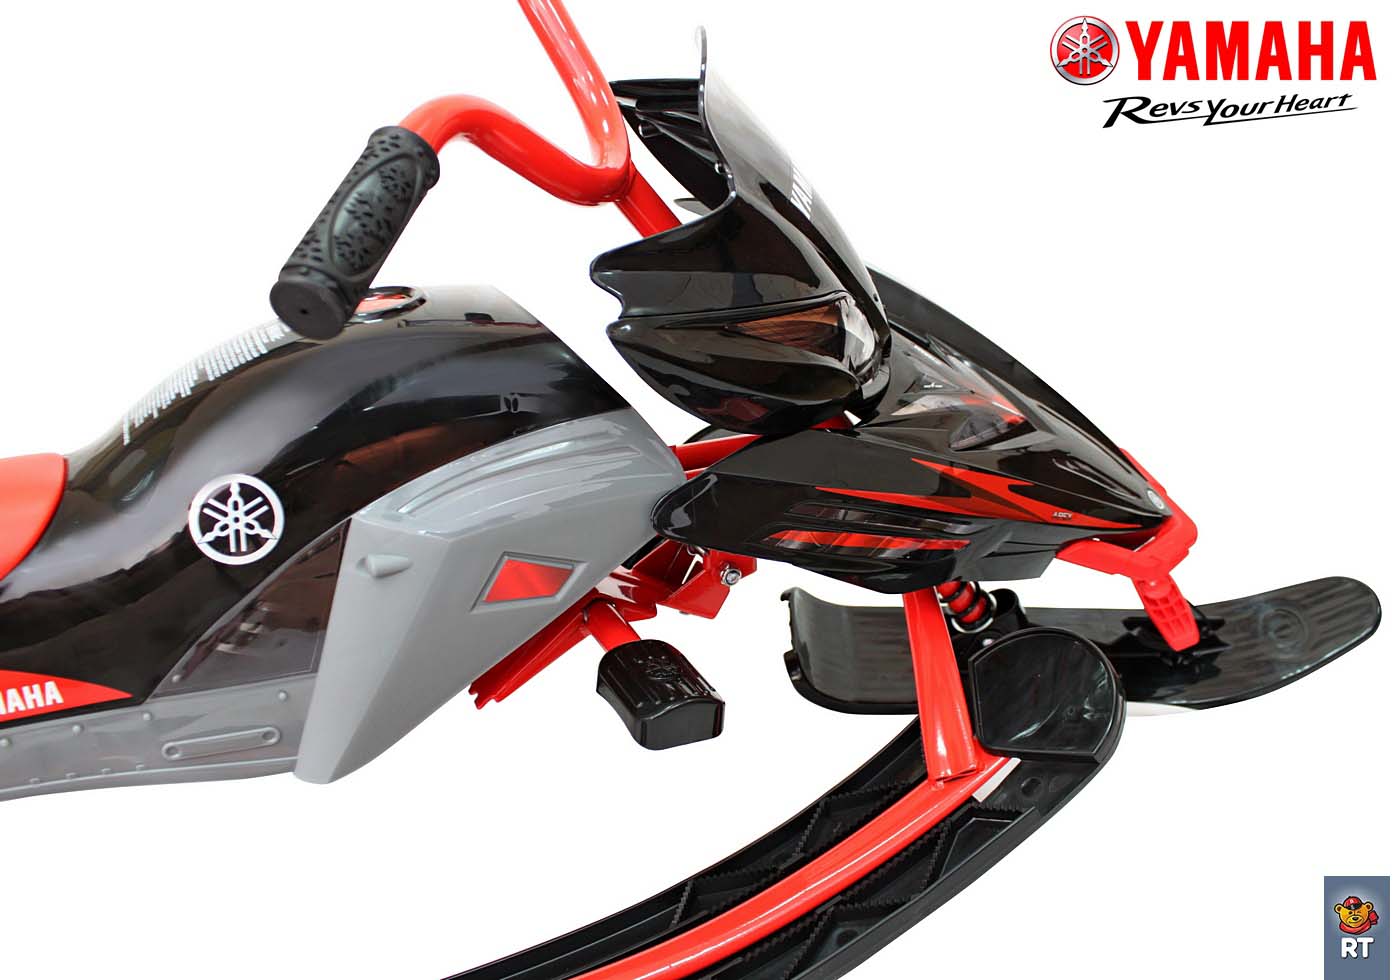 Снегокат - Yamaha Apex Snow Bike, Titanium black/red  